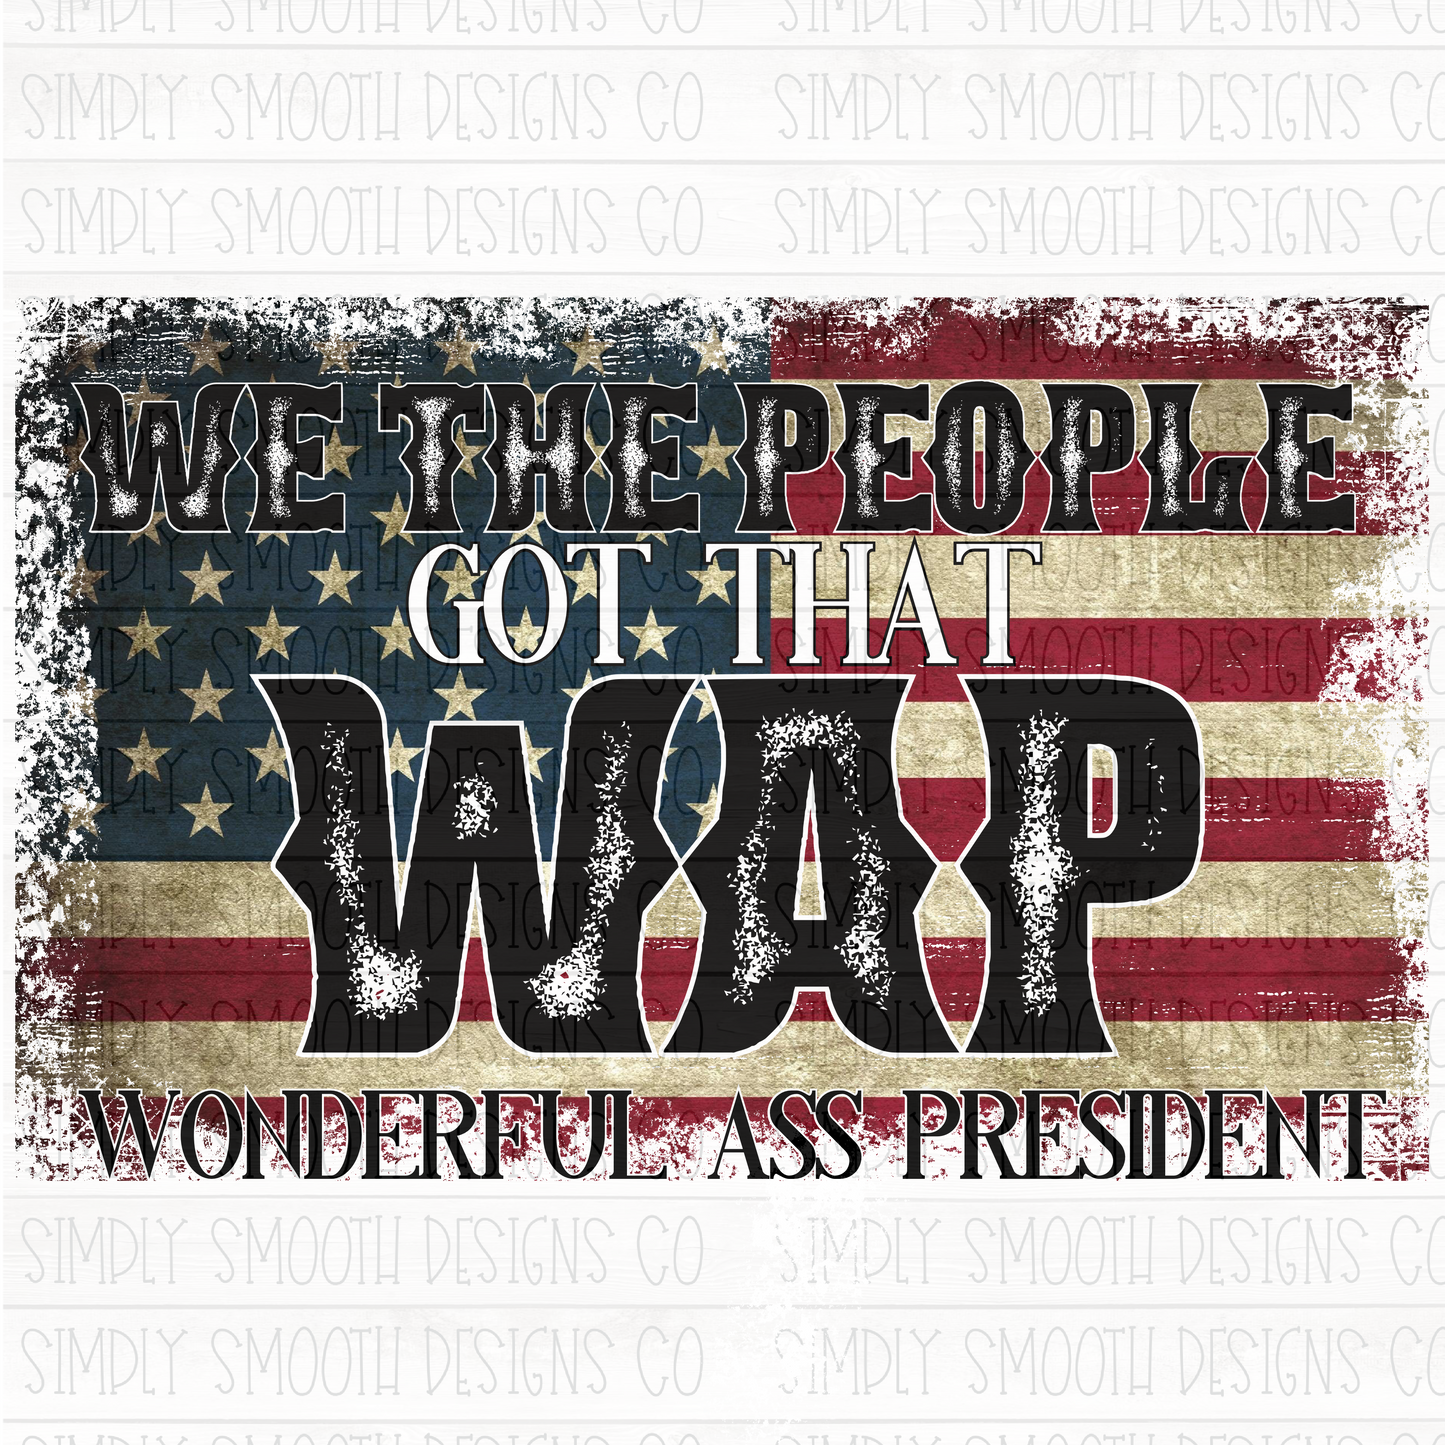 We the people got that wap wonderful